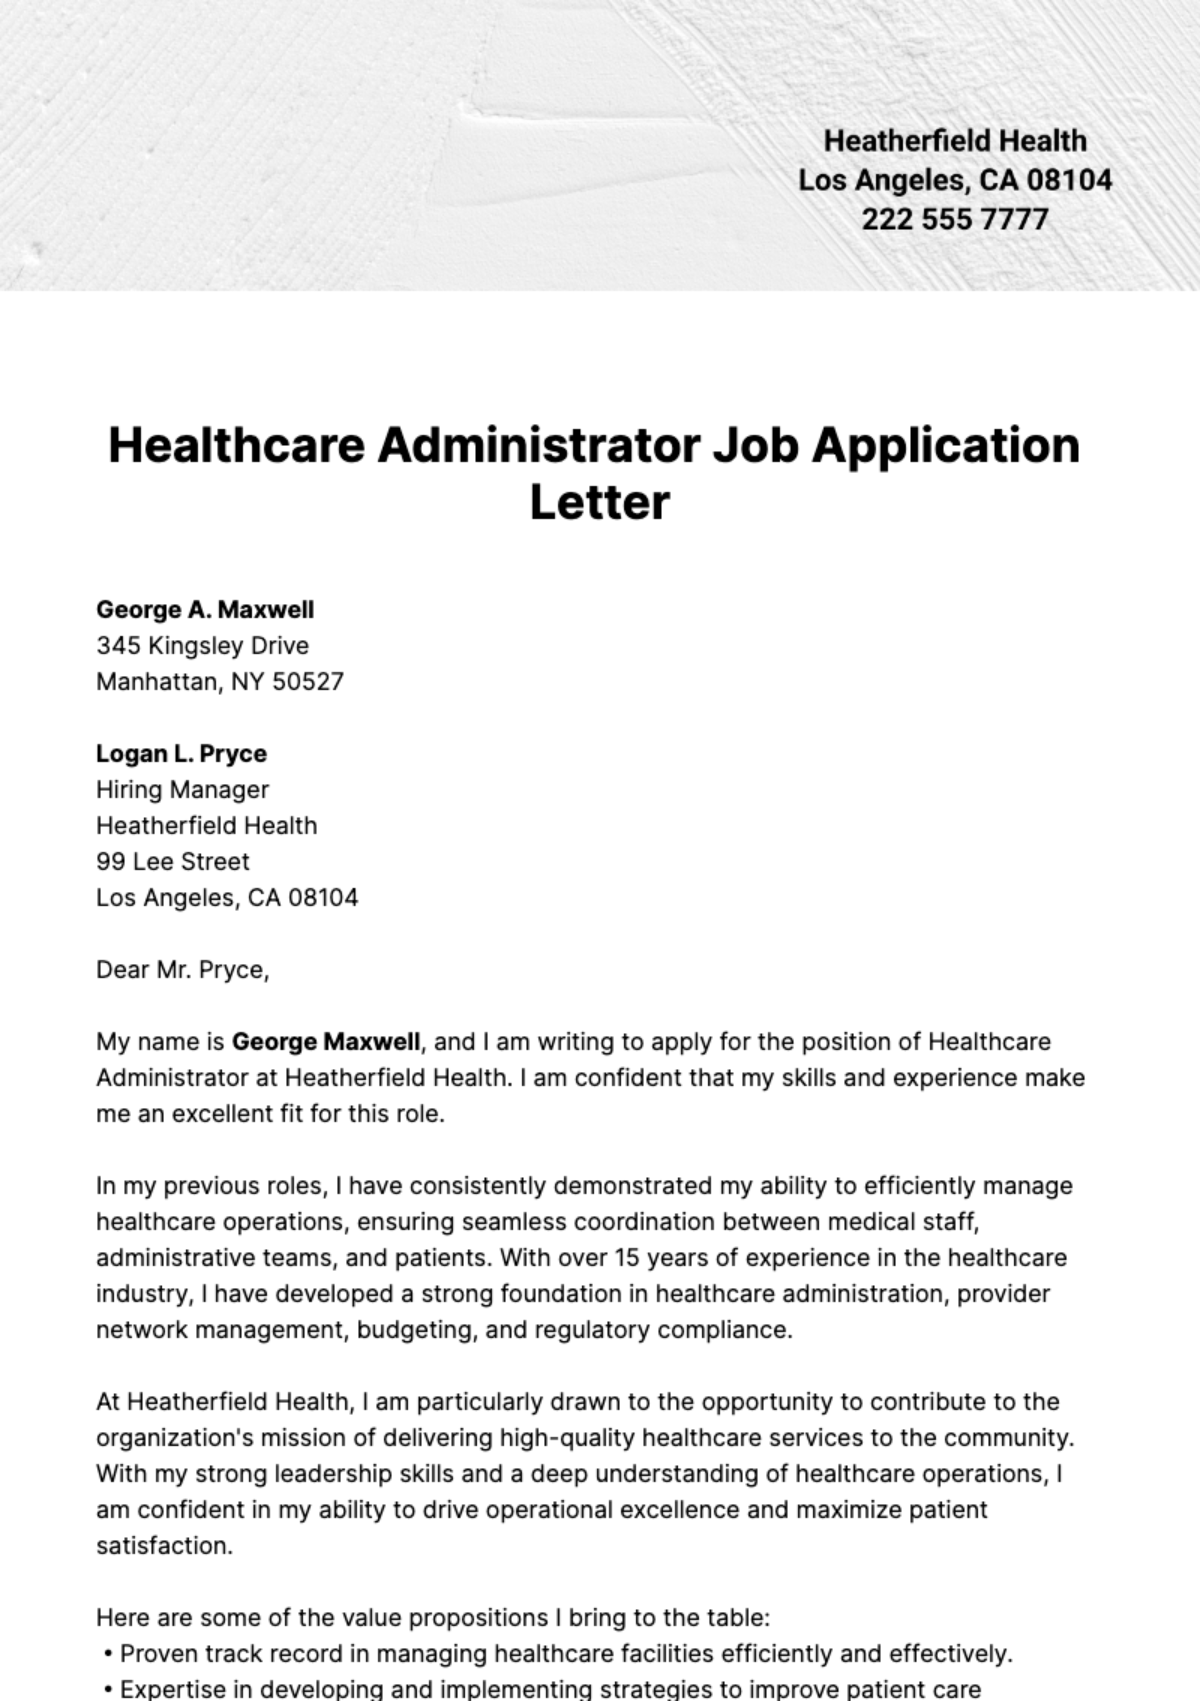 Healthcare Administrator Job Application Letter  Template